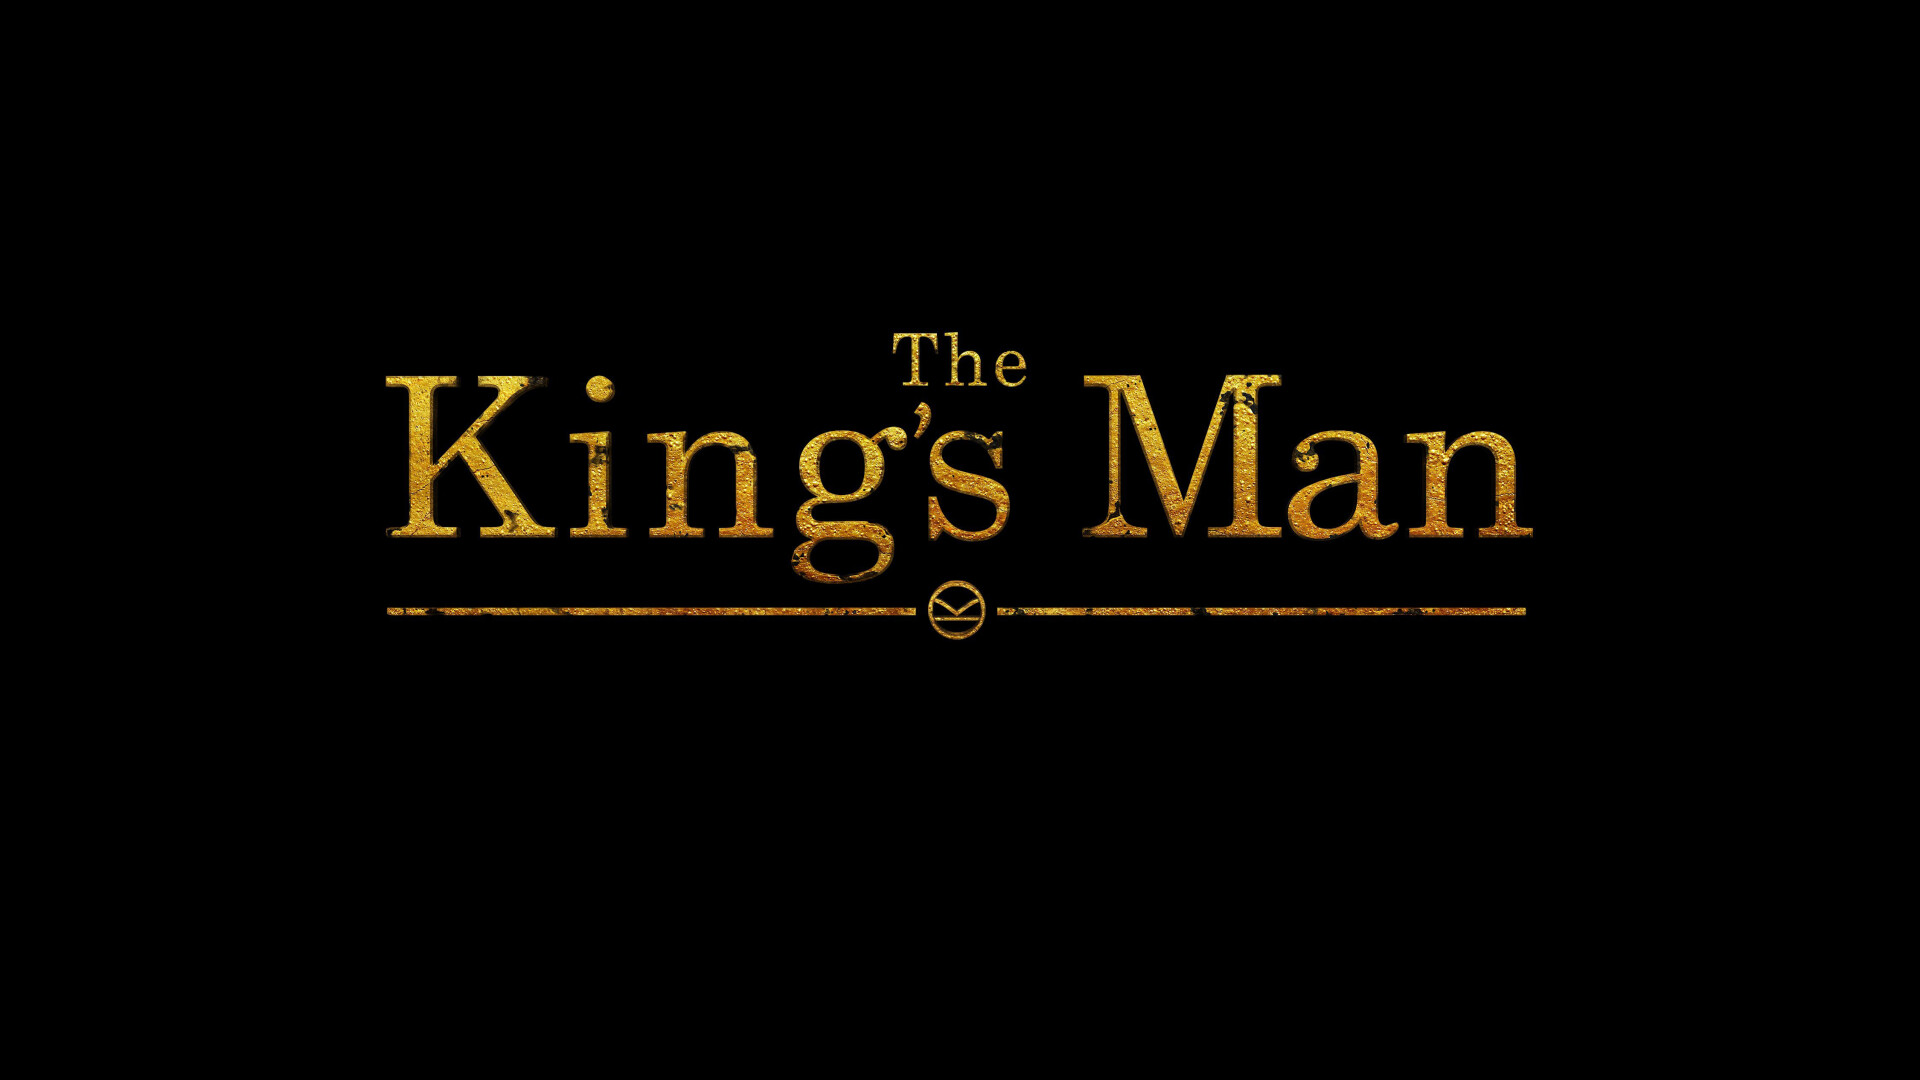 The King's Man: The villains include Rhys Ifans as Grigori Rasputin and Matthew Goode as Captain Morton. 1920x1080 Full HD Wallpaper.